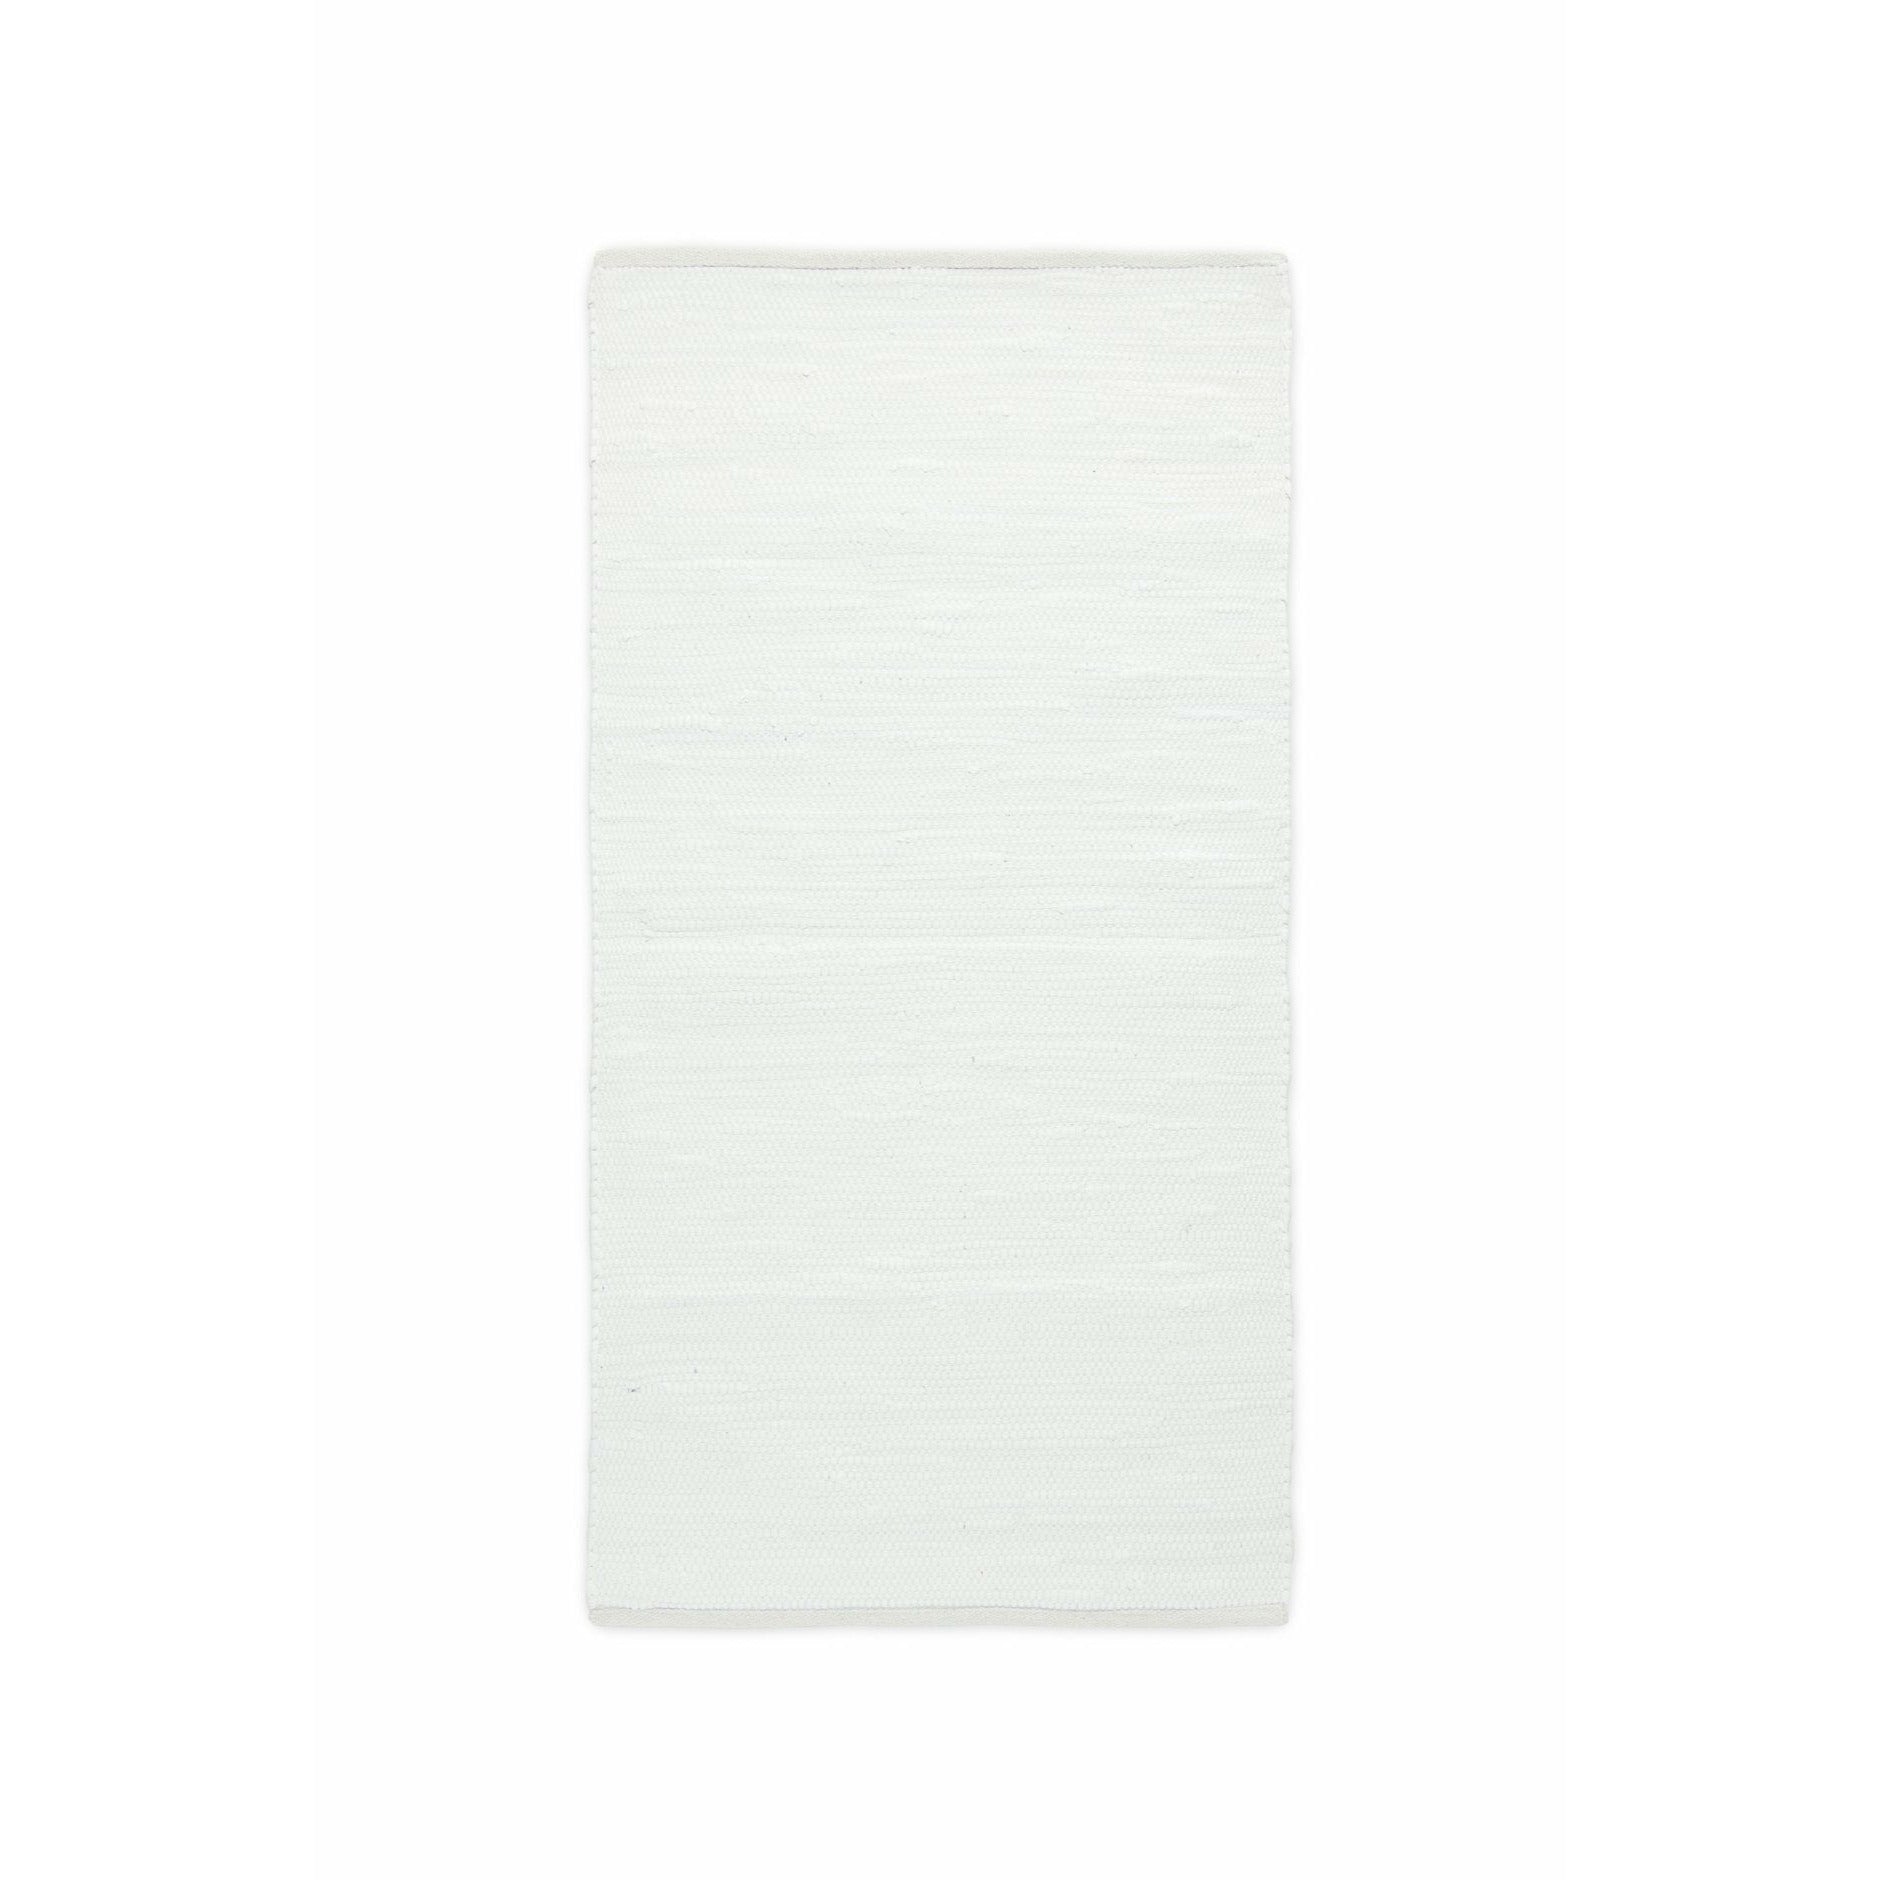 Rug Solid Tapon de coton blanc, 65 x 135 cm